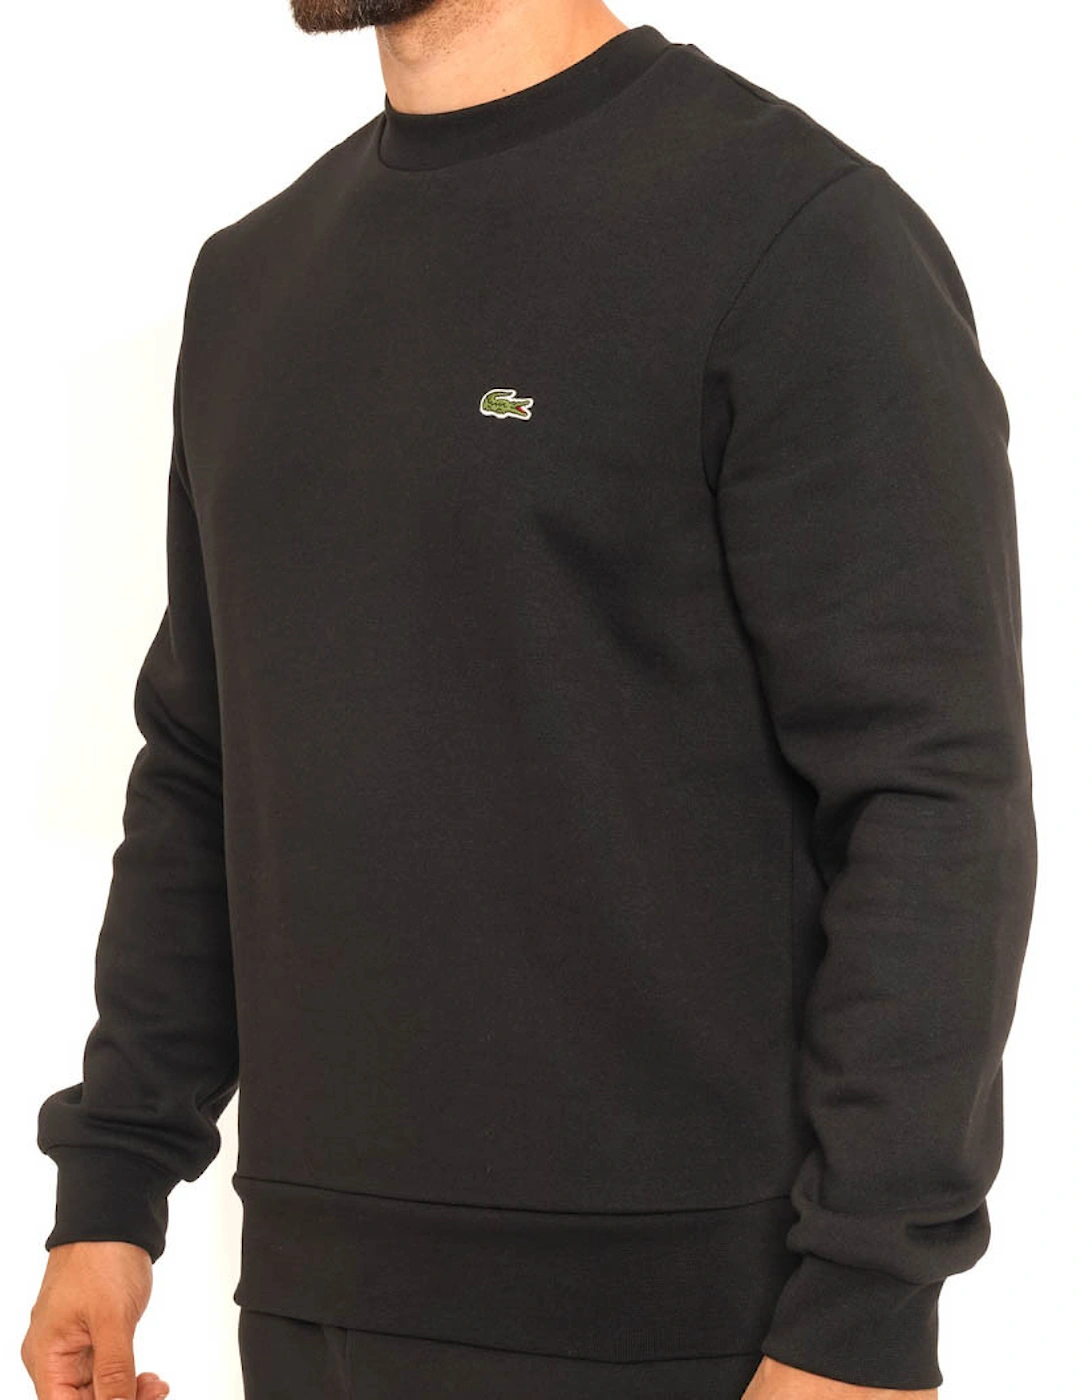 Mens Crew Neck Sweatshirt (Black)